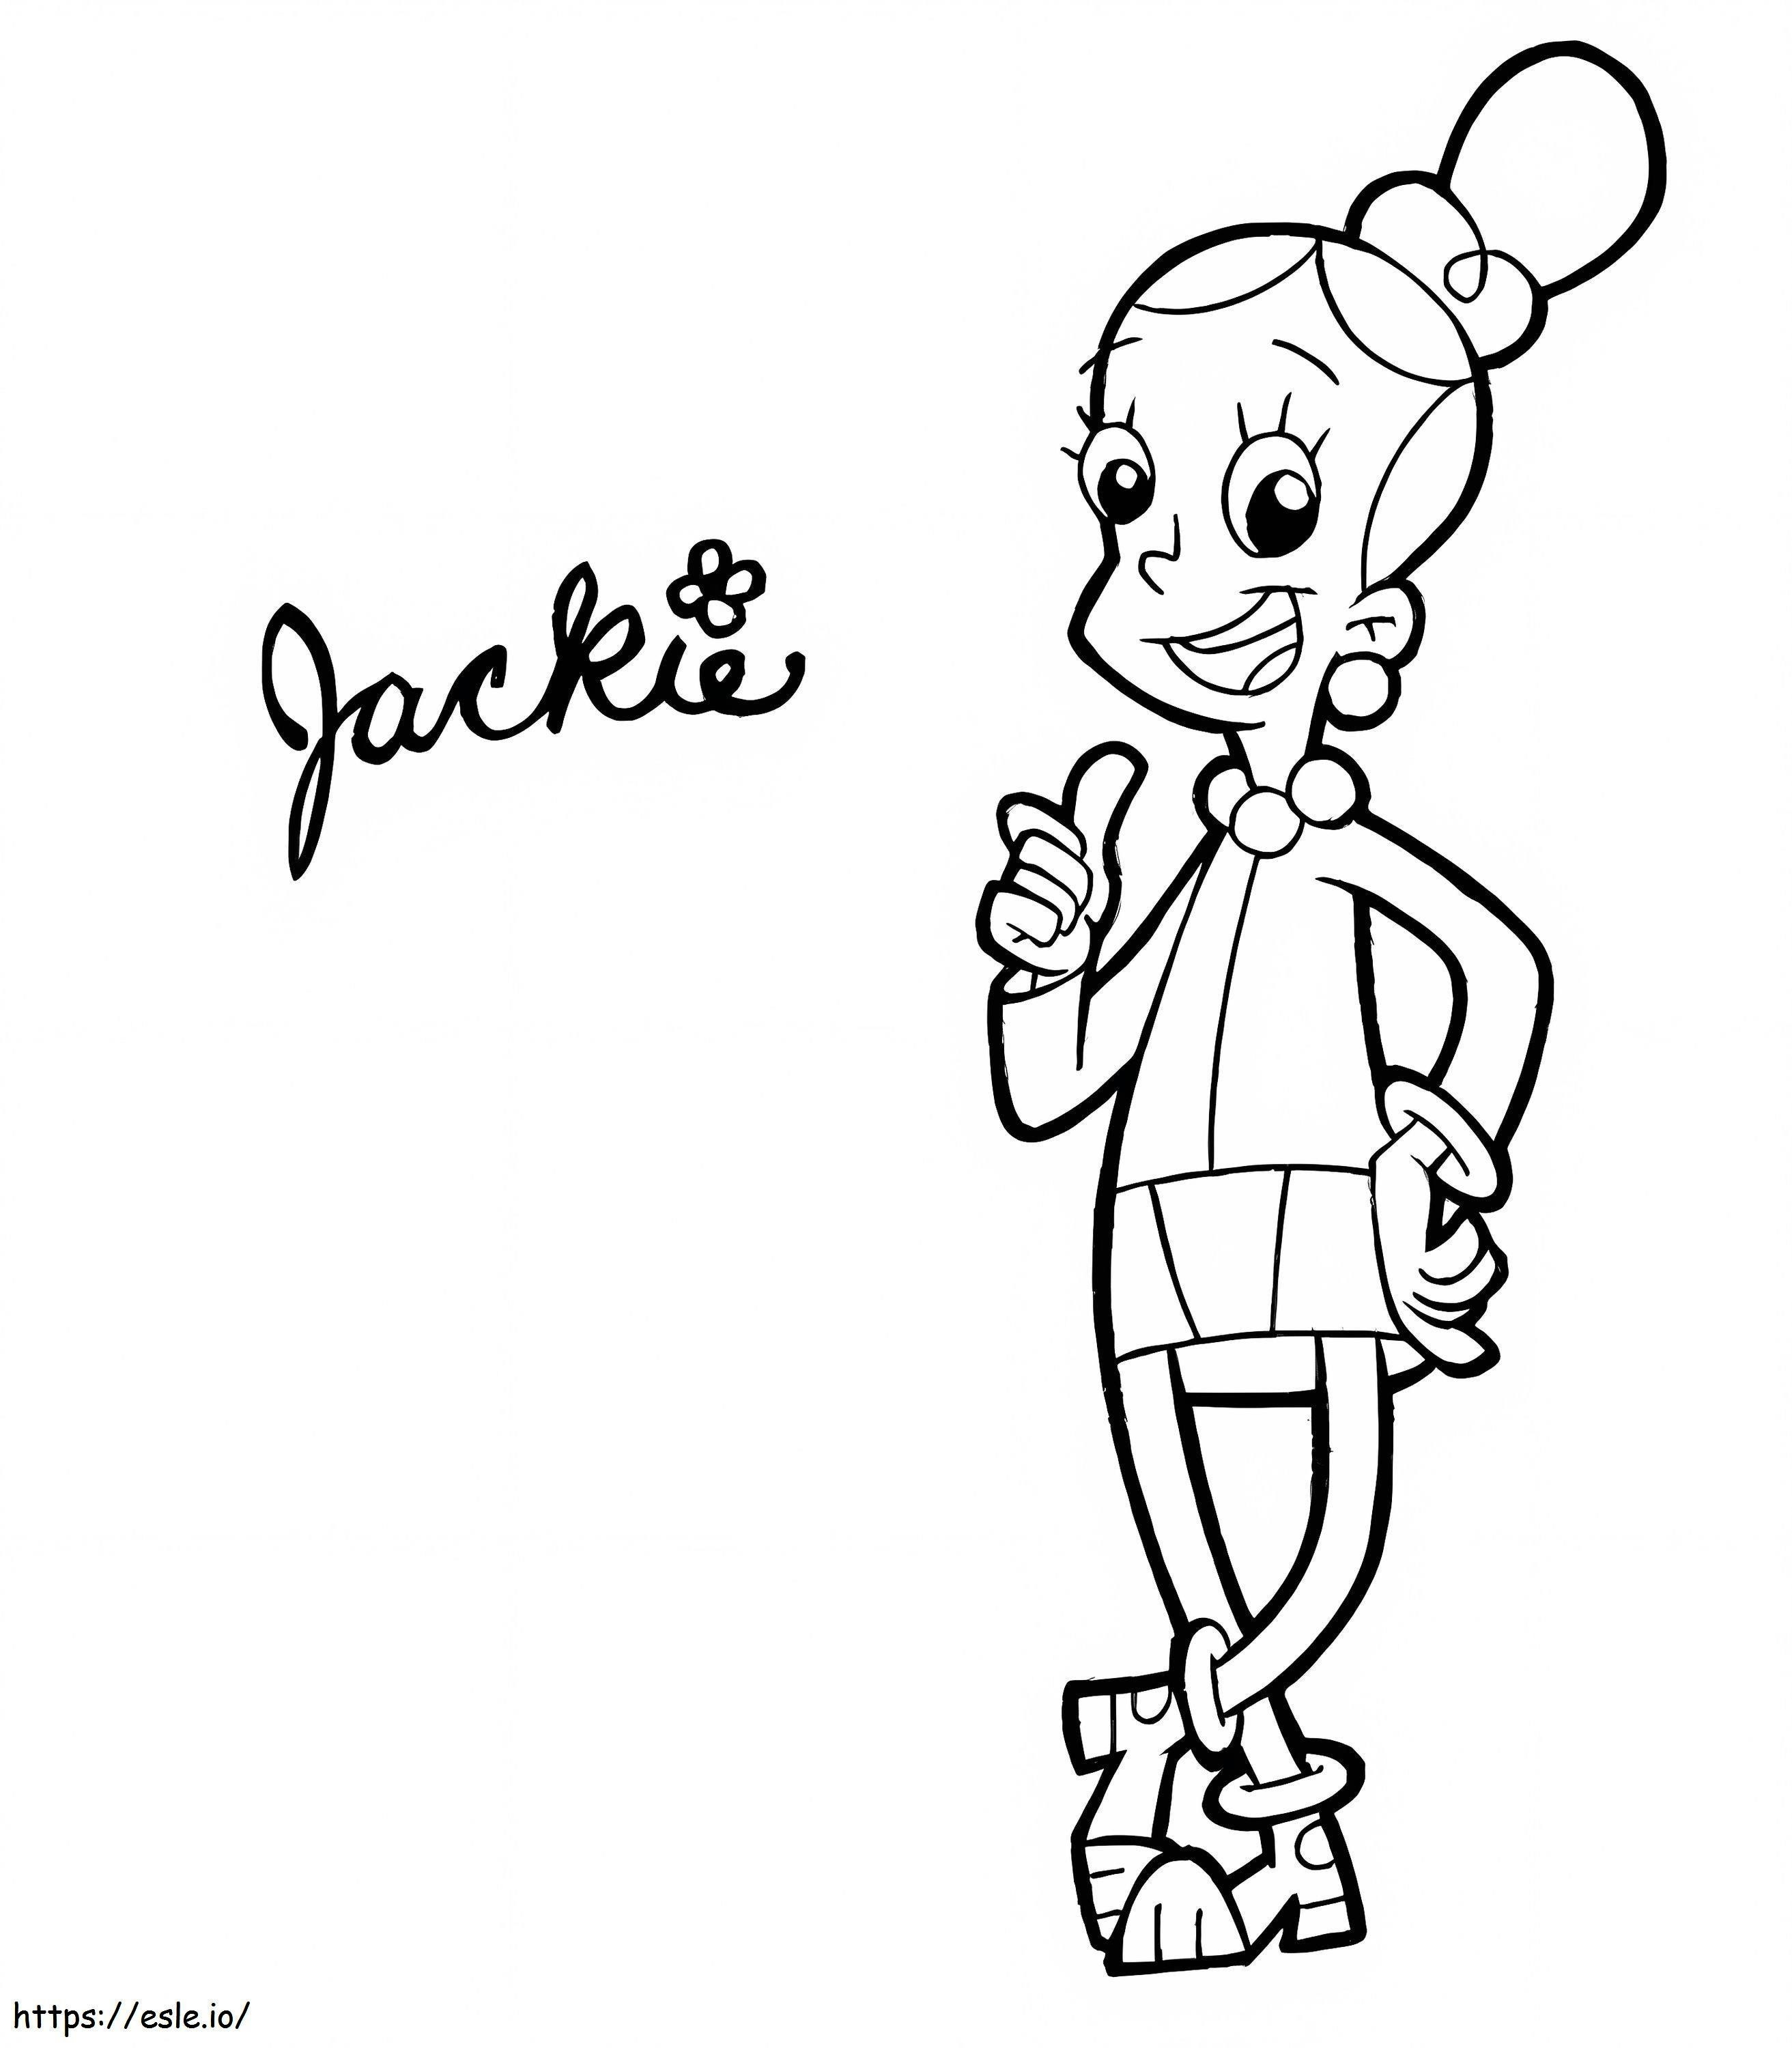 Jackie Cyberchase sorrindo para colorir